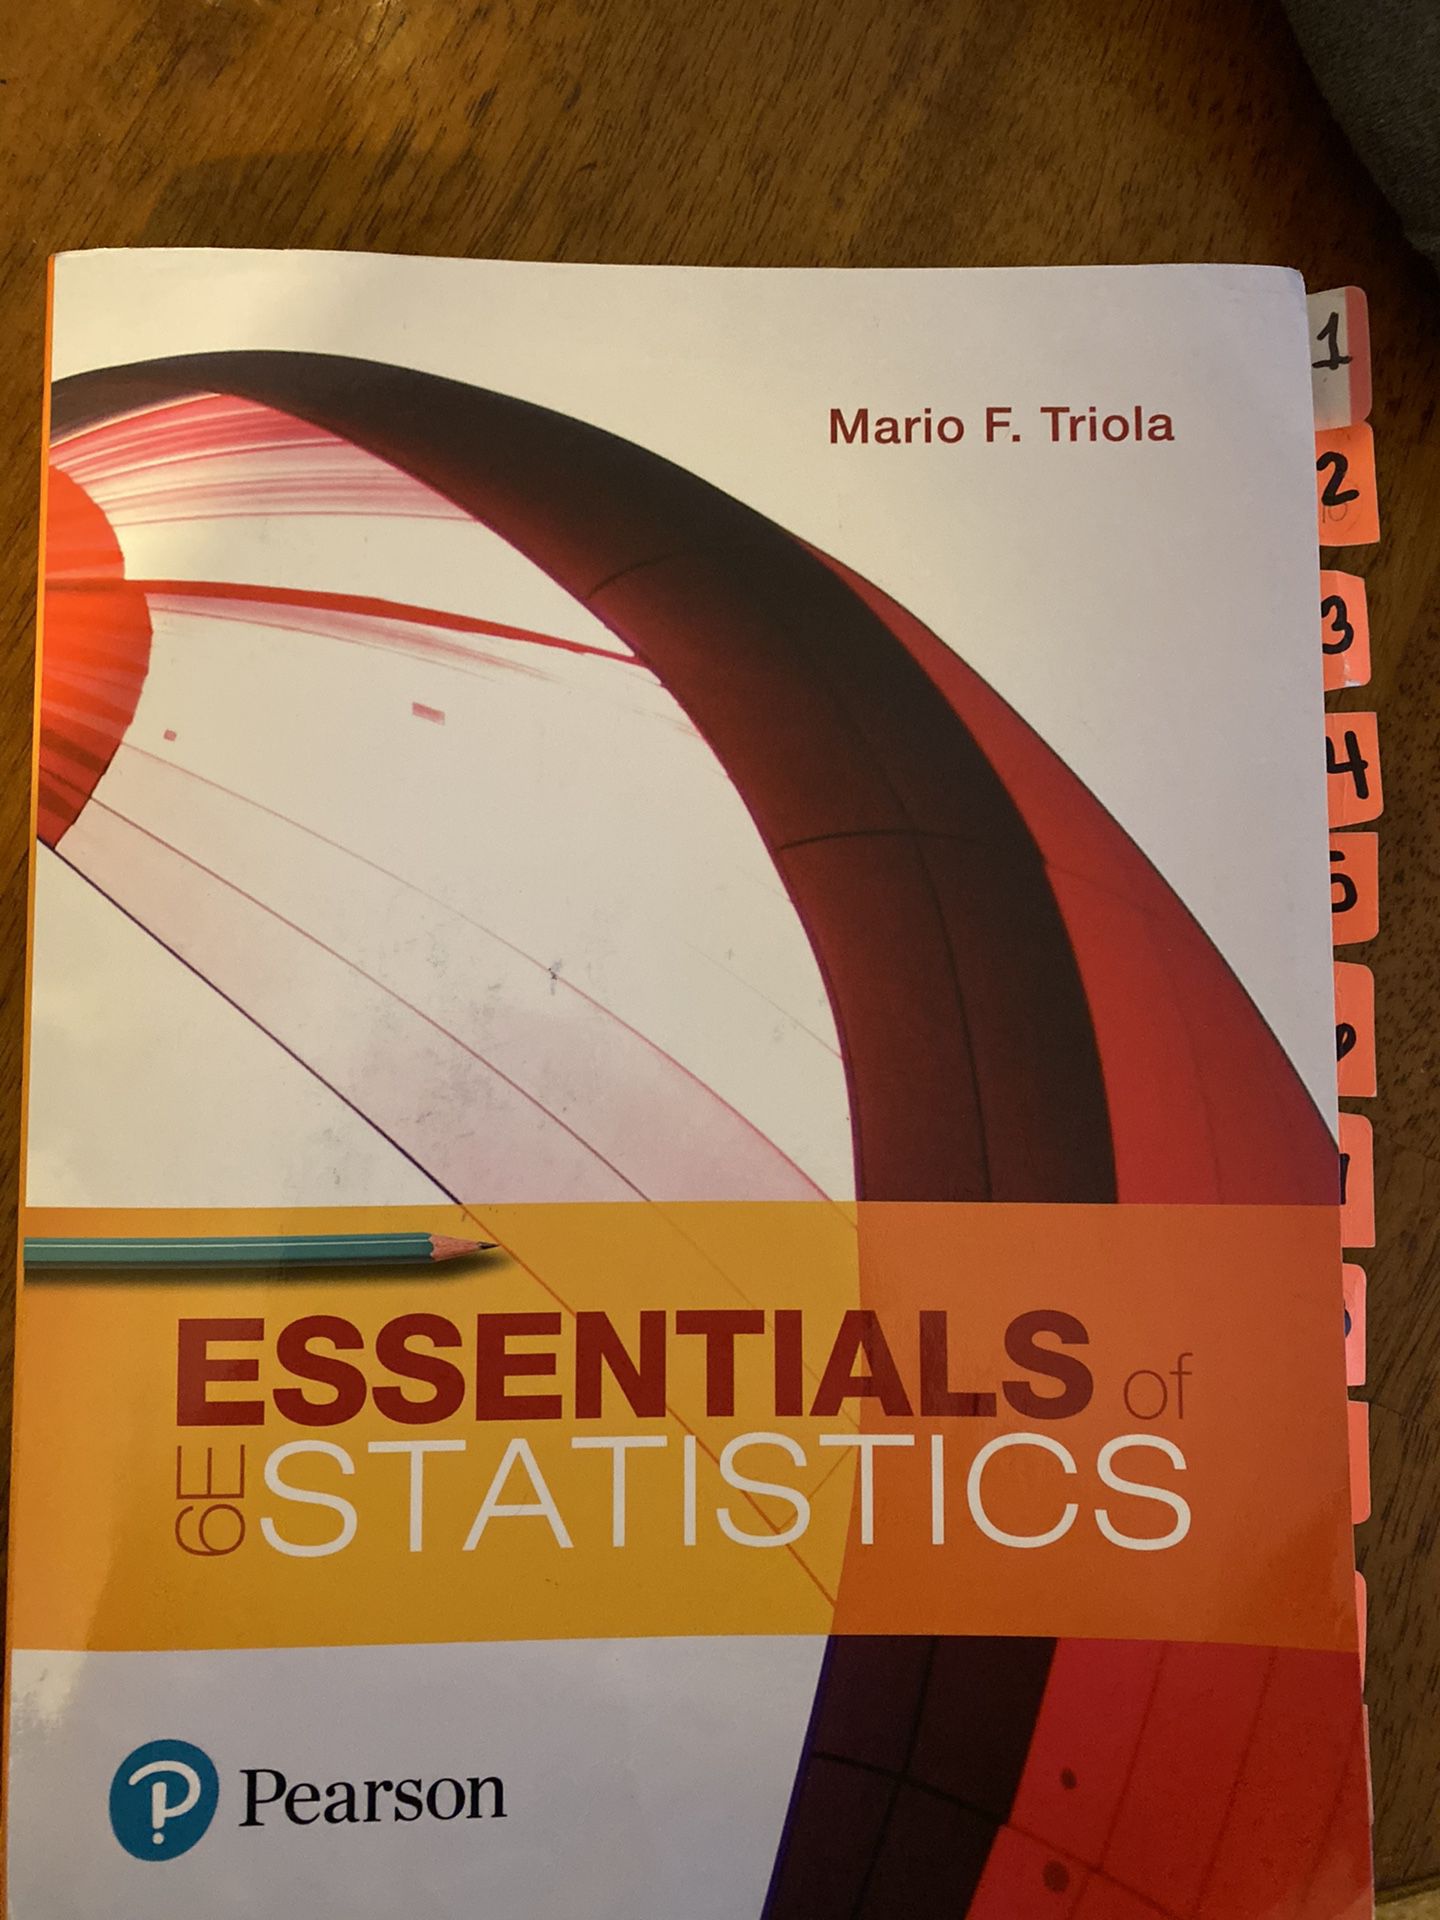 Statistics textbook